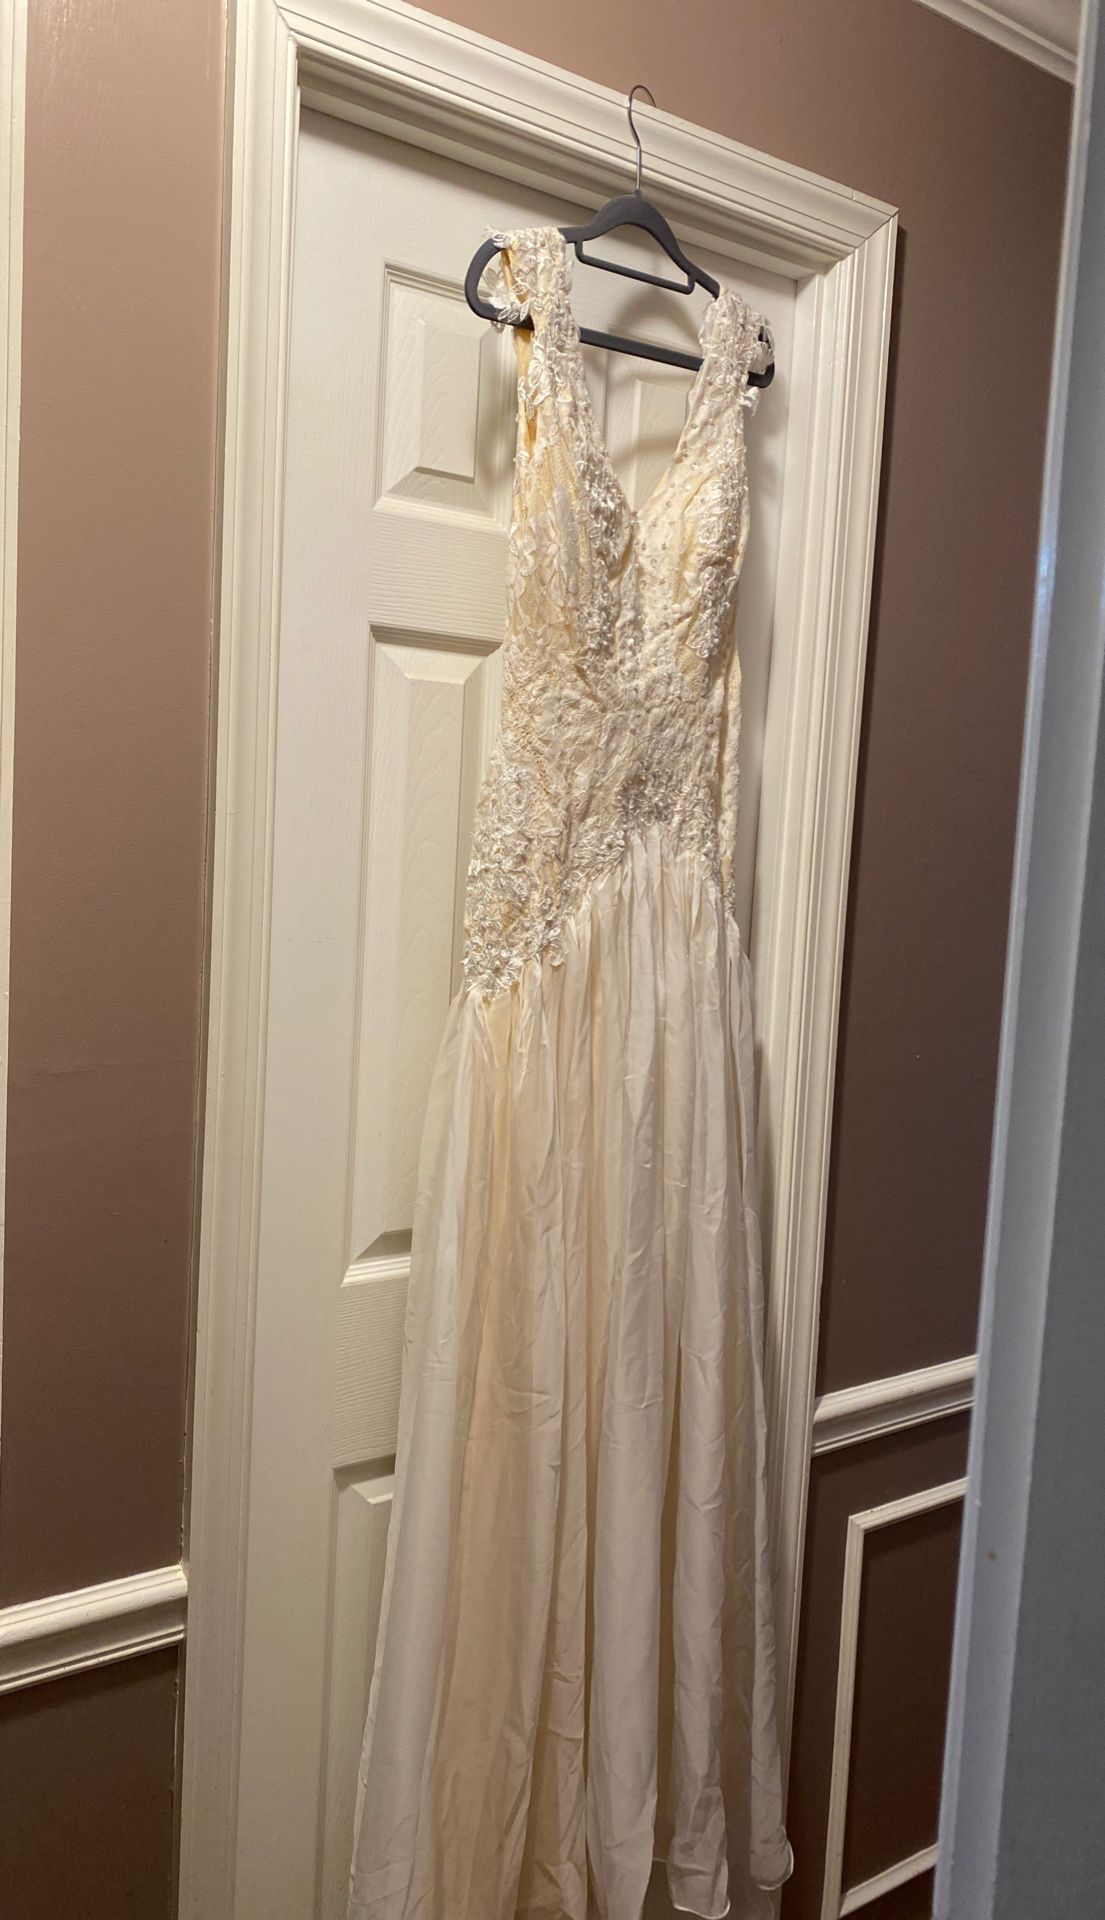 Ivory Formal/Wedding/Bridal Dress/Gown - NEW w/ Tags